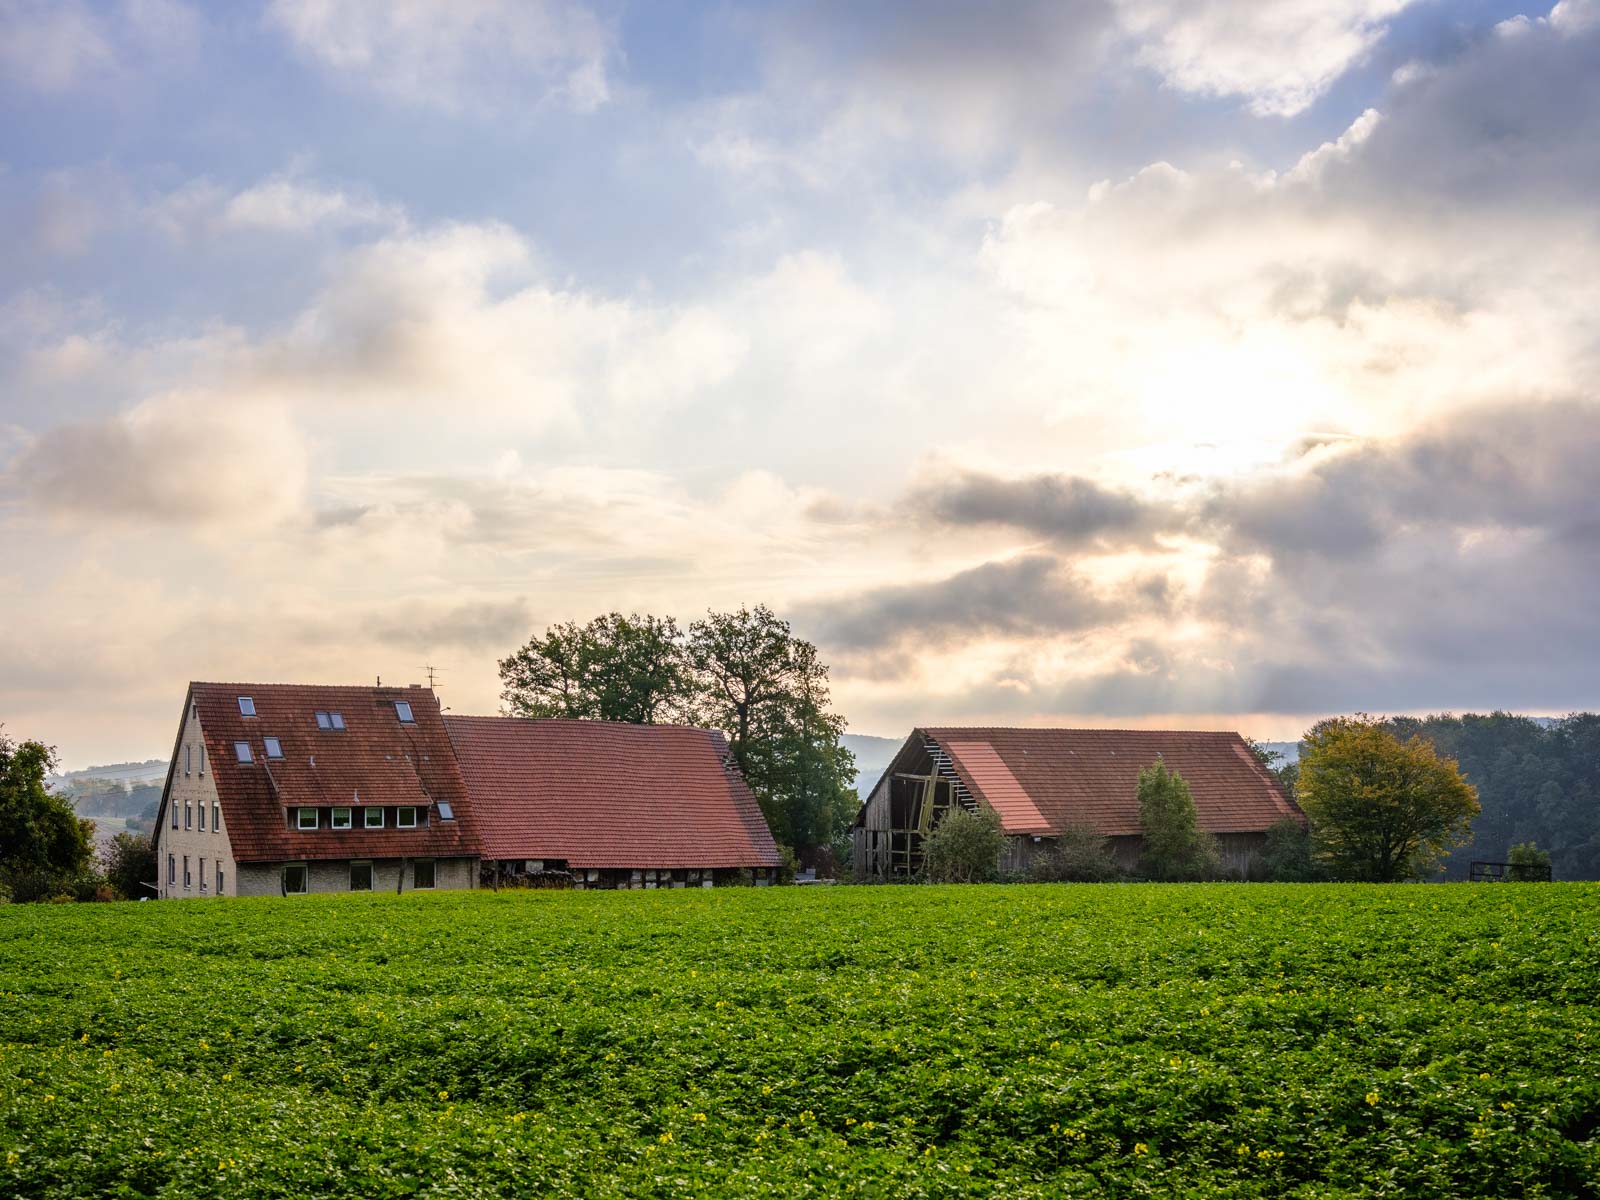 Farmhouse at 'Kirchdornberg' in October 2020 (Bielefeld, Germany)..